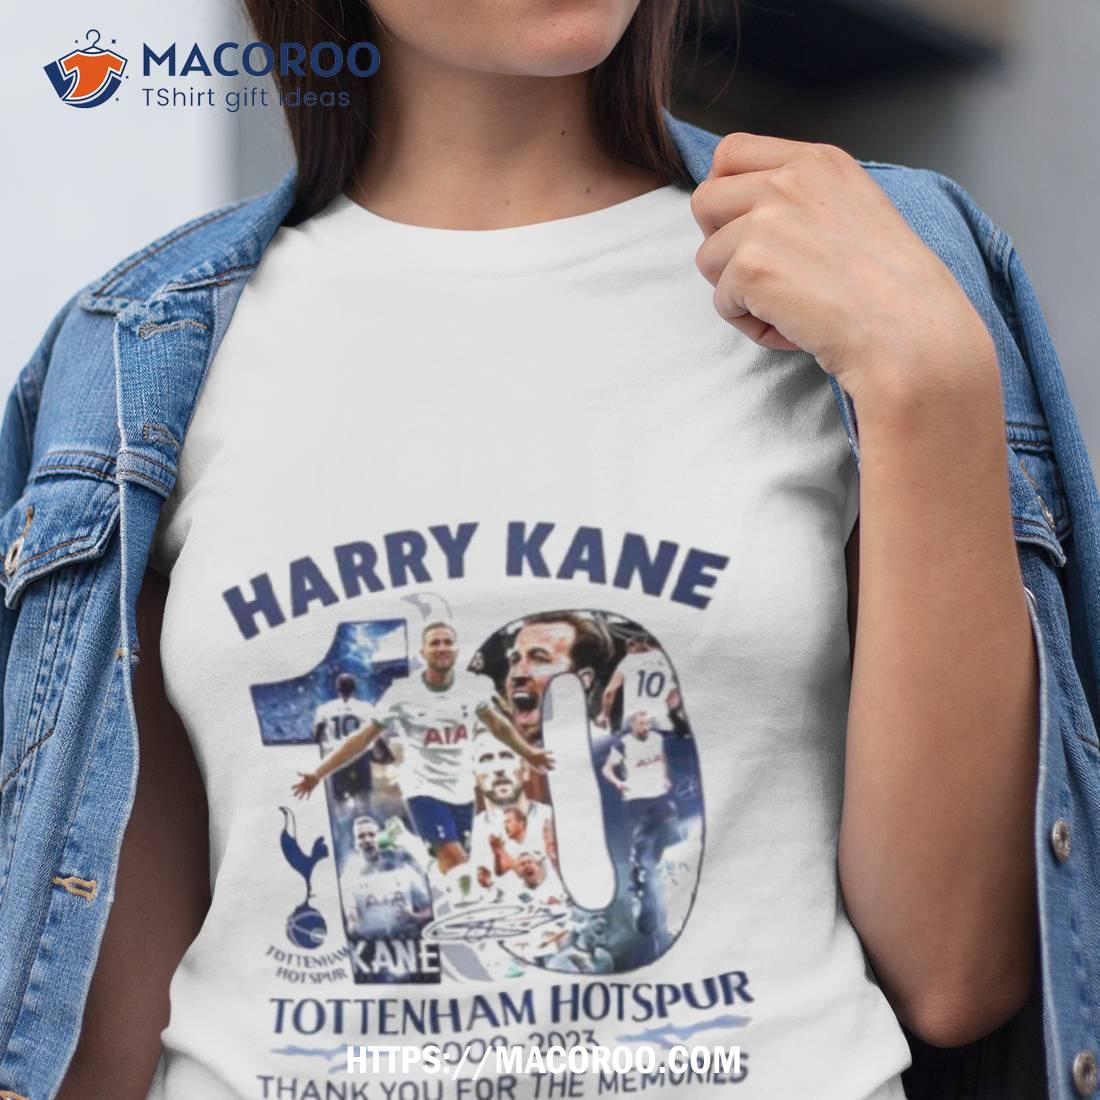 Thank You Harry Kane Tottenham Hotspur 2009-2023 signature Shirt